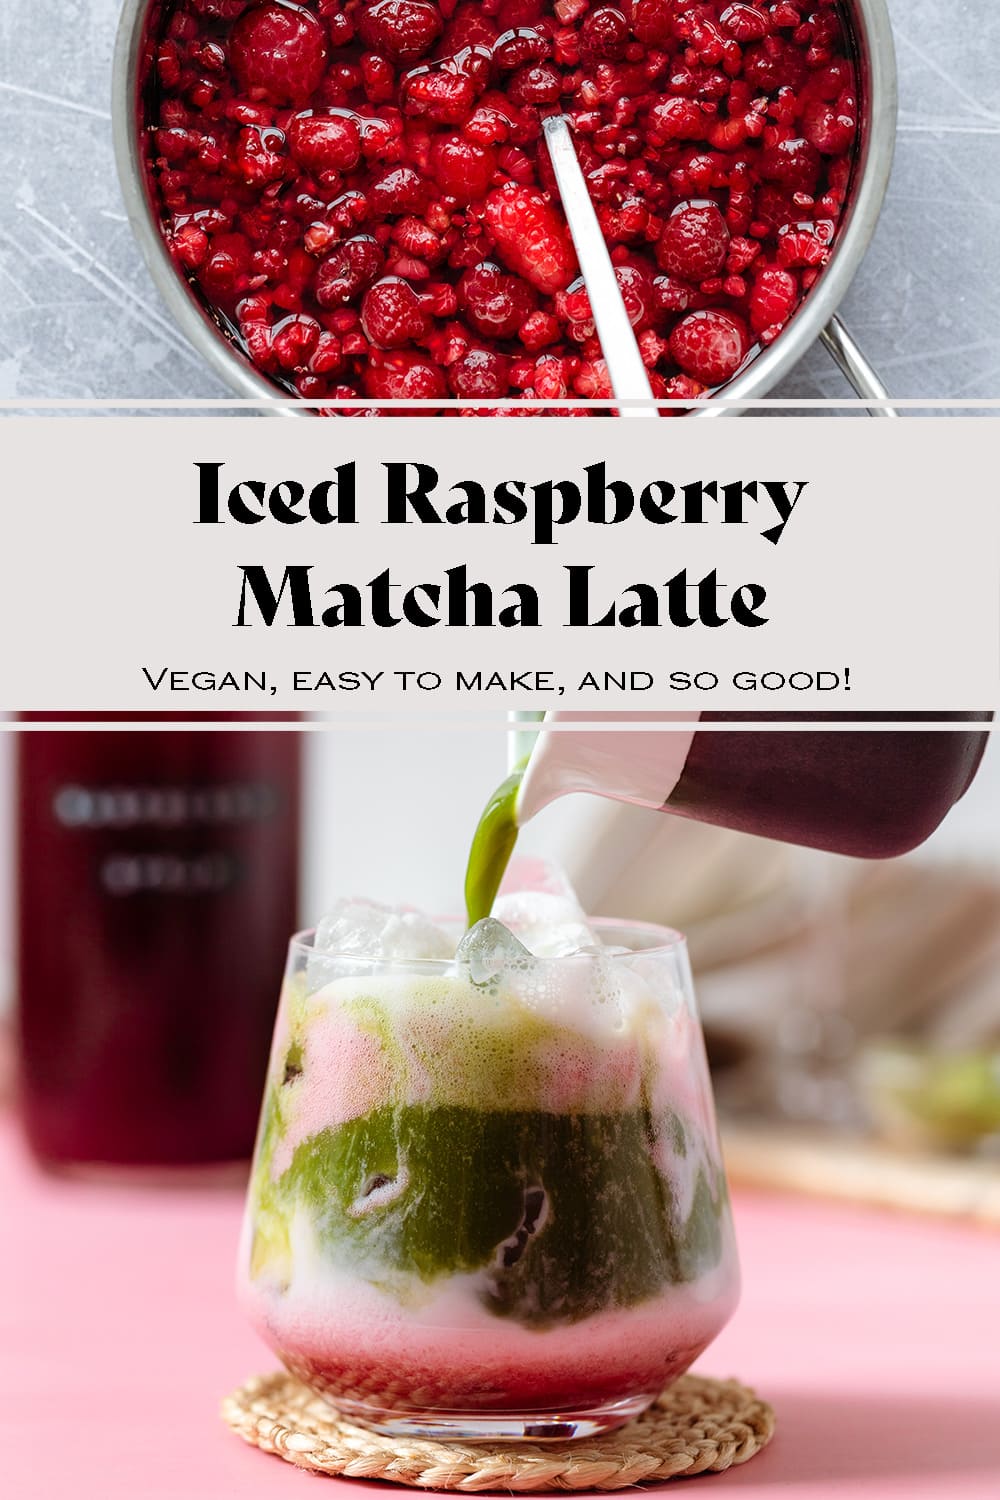 Iced Raspberry Matcha Latte